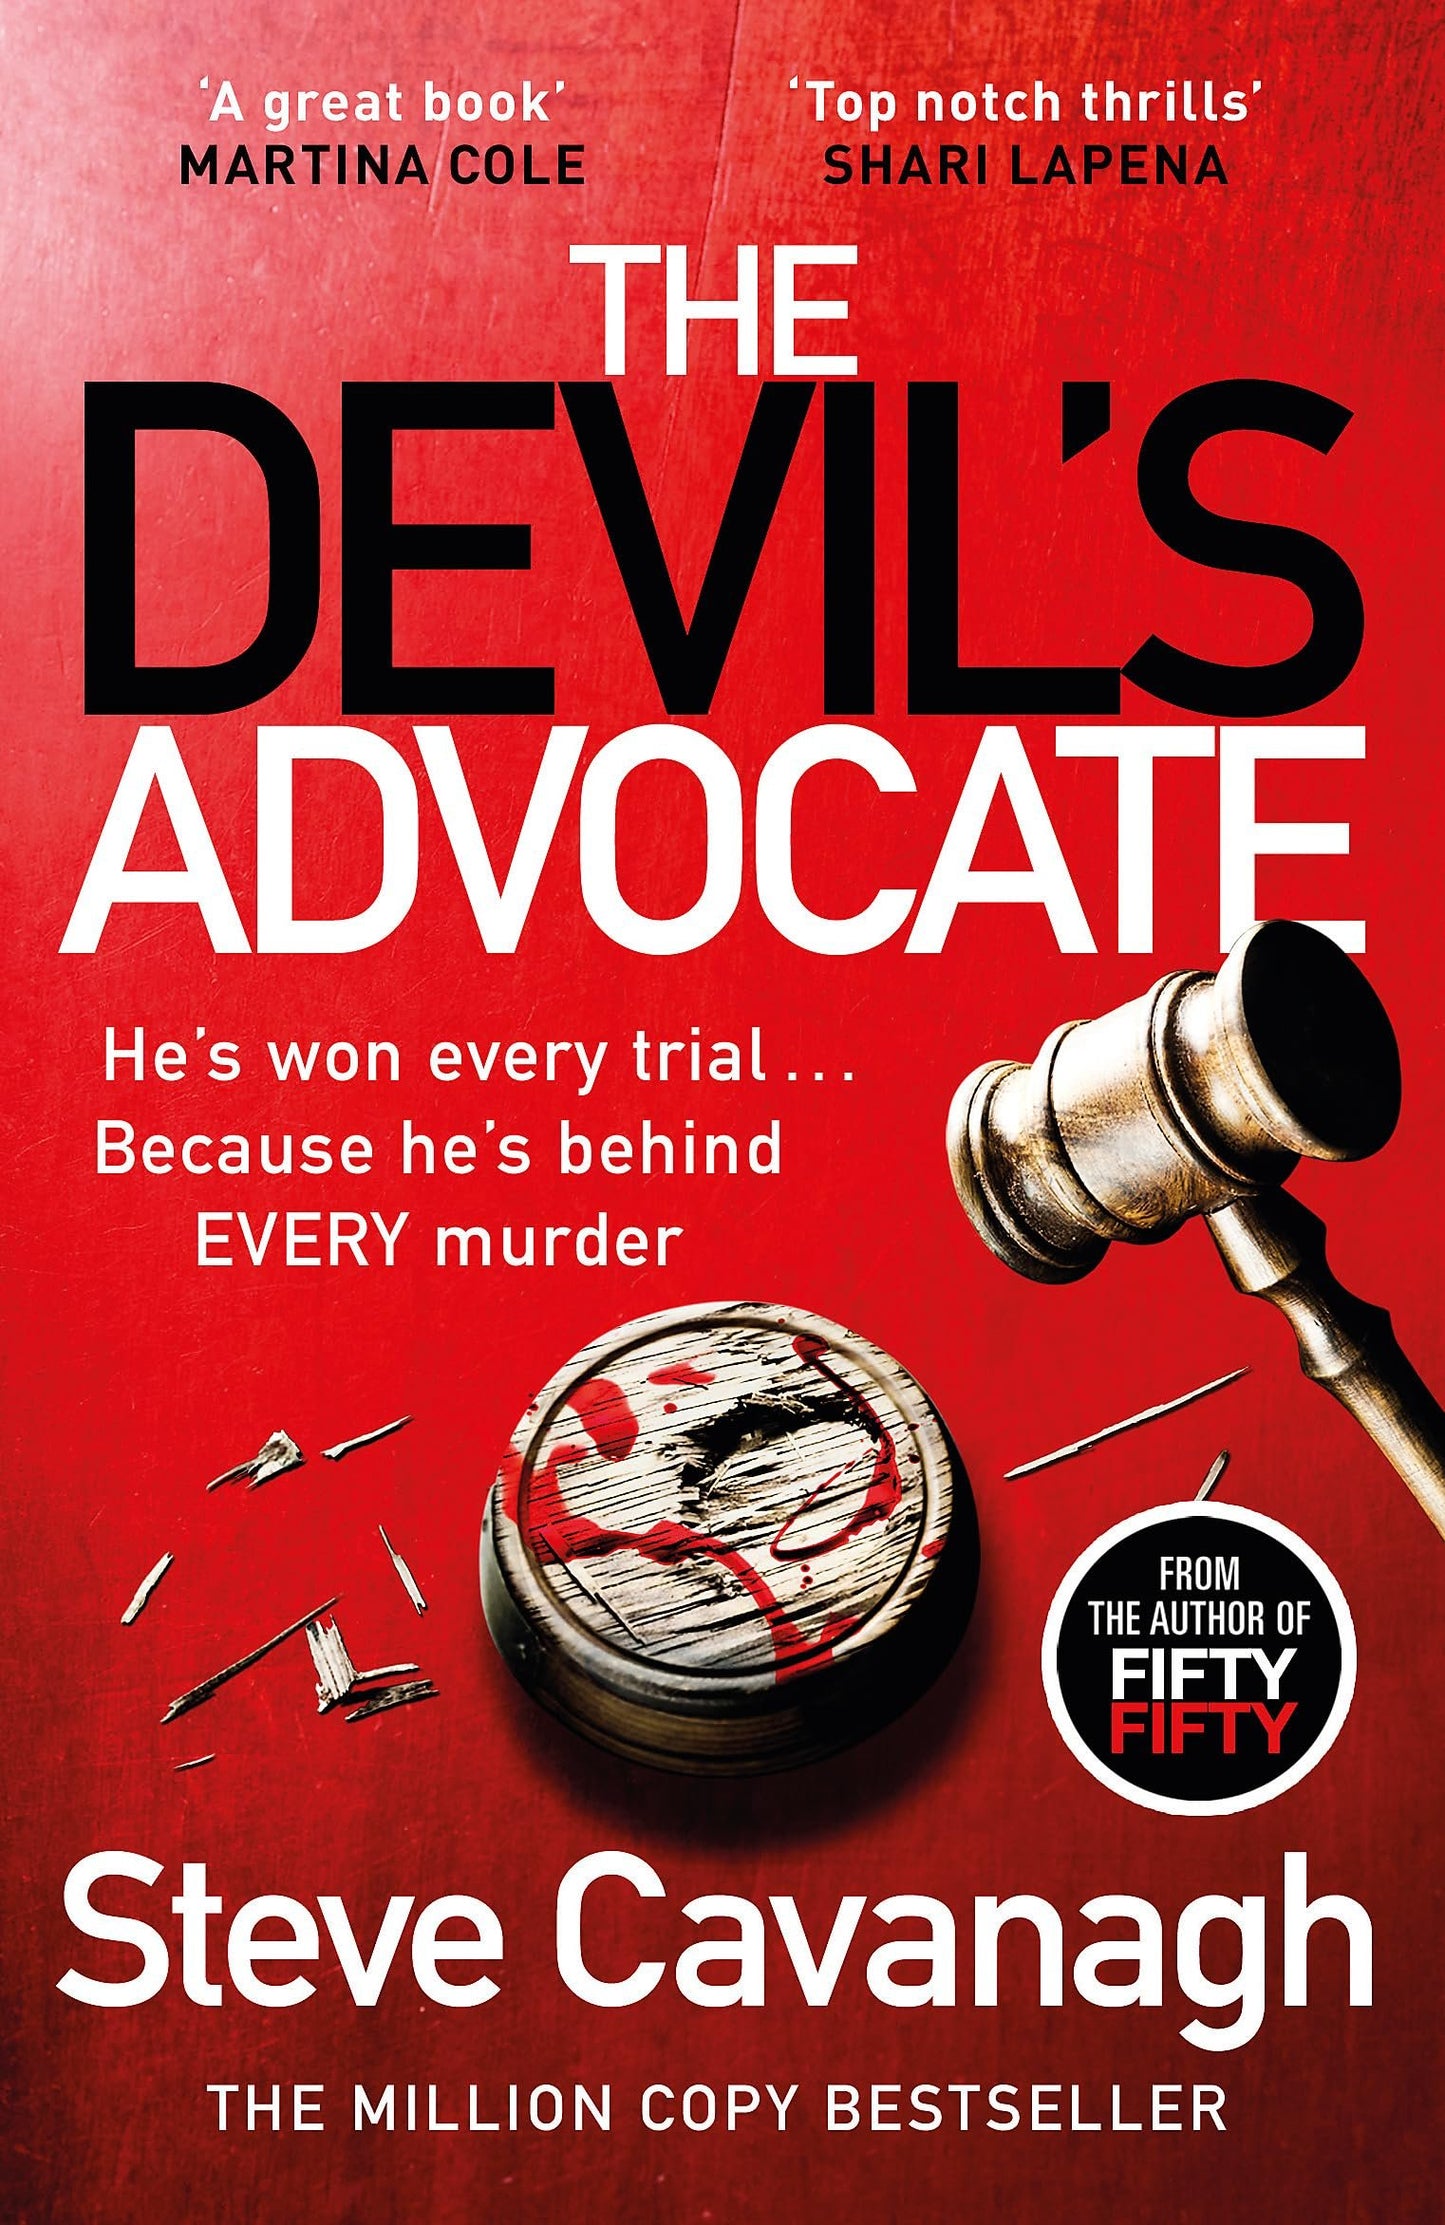 The Devil's Advocate - A Thrilling Legal Drama